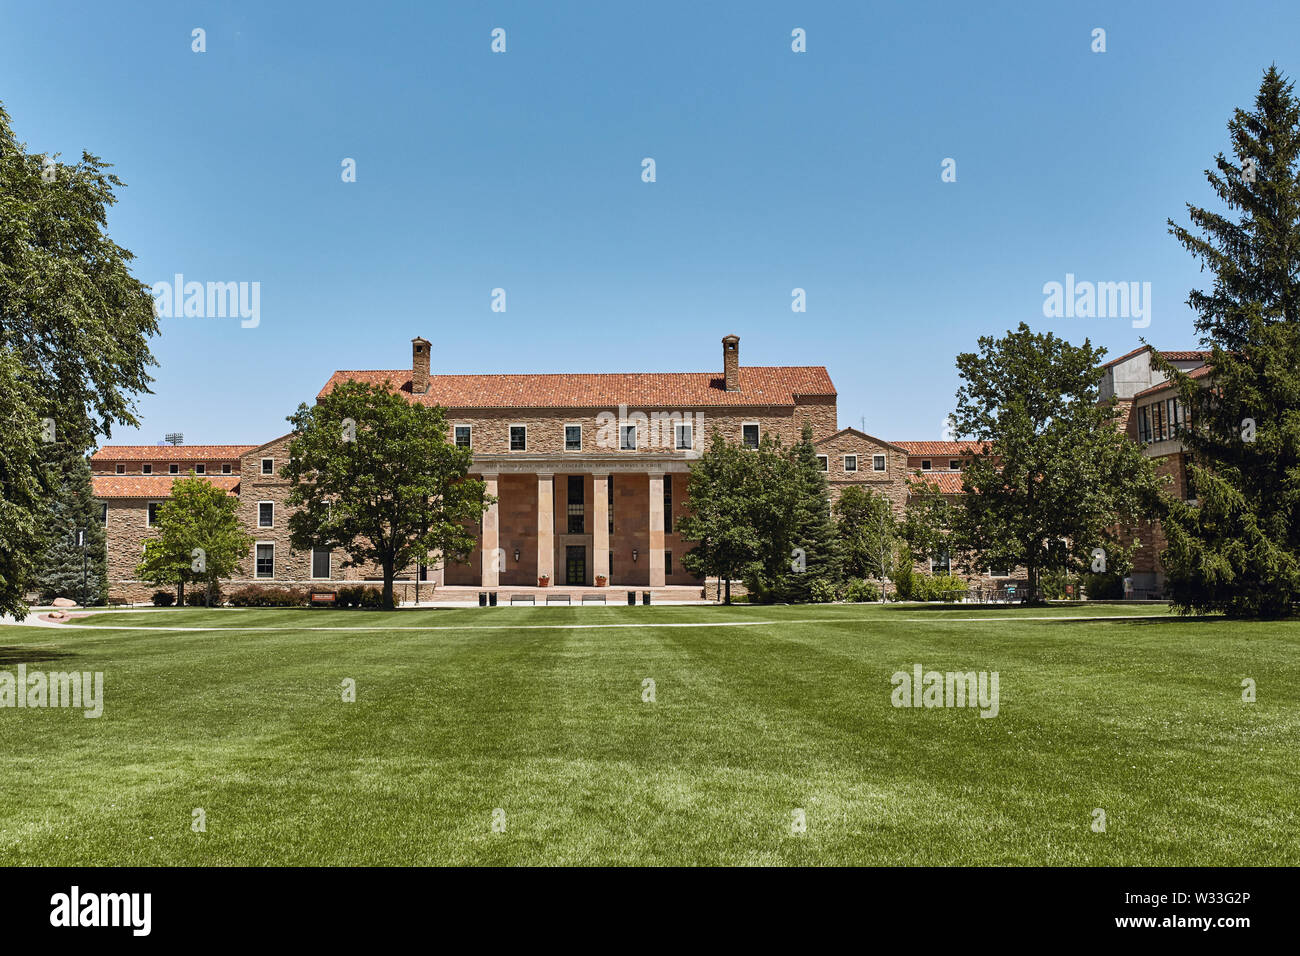 Boulder, Colorado - July 11th, 2019: Exterior of Norlin Library at the University of Colorado Boulder campus Stock Photo